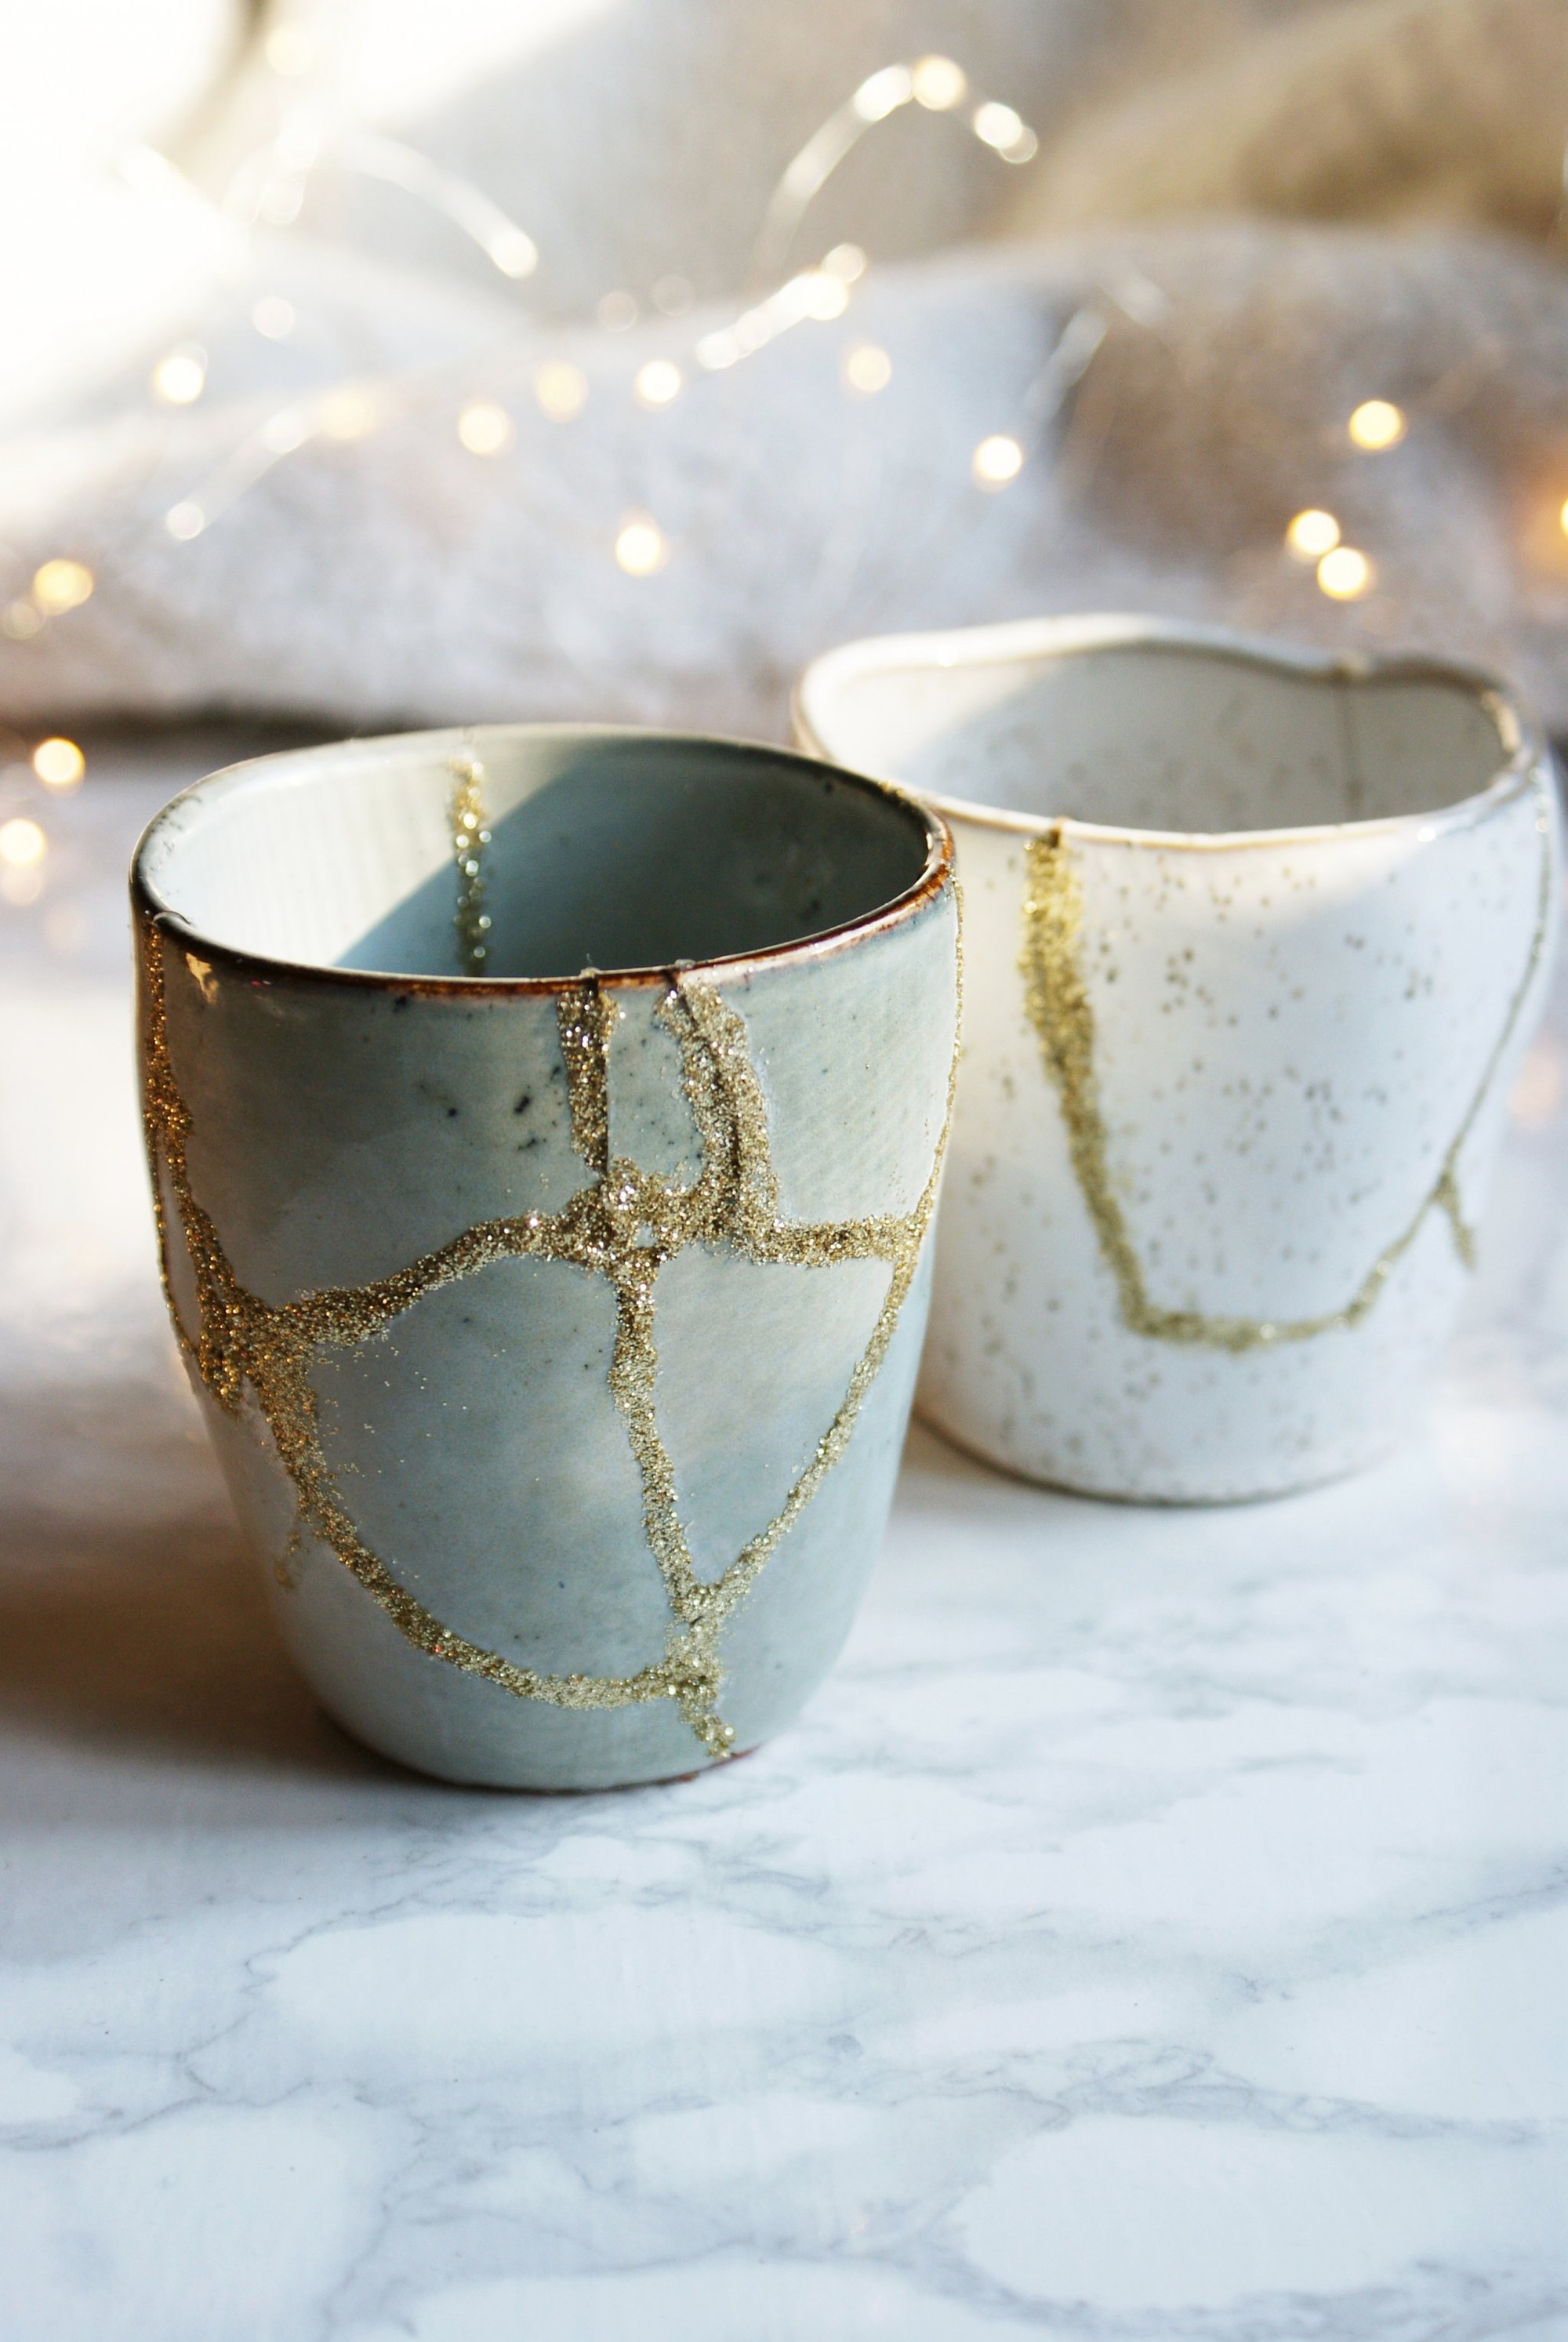 diy-kintsugi-japanese-art-pottery-ceramic-broken-repair-glitter-glue-gold-faidate-riparare-ceramica-oro-giapponese-colla-francinesplaceblog-15